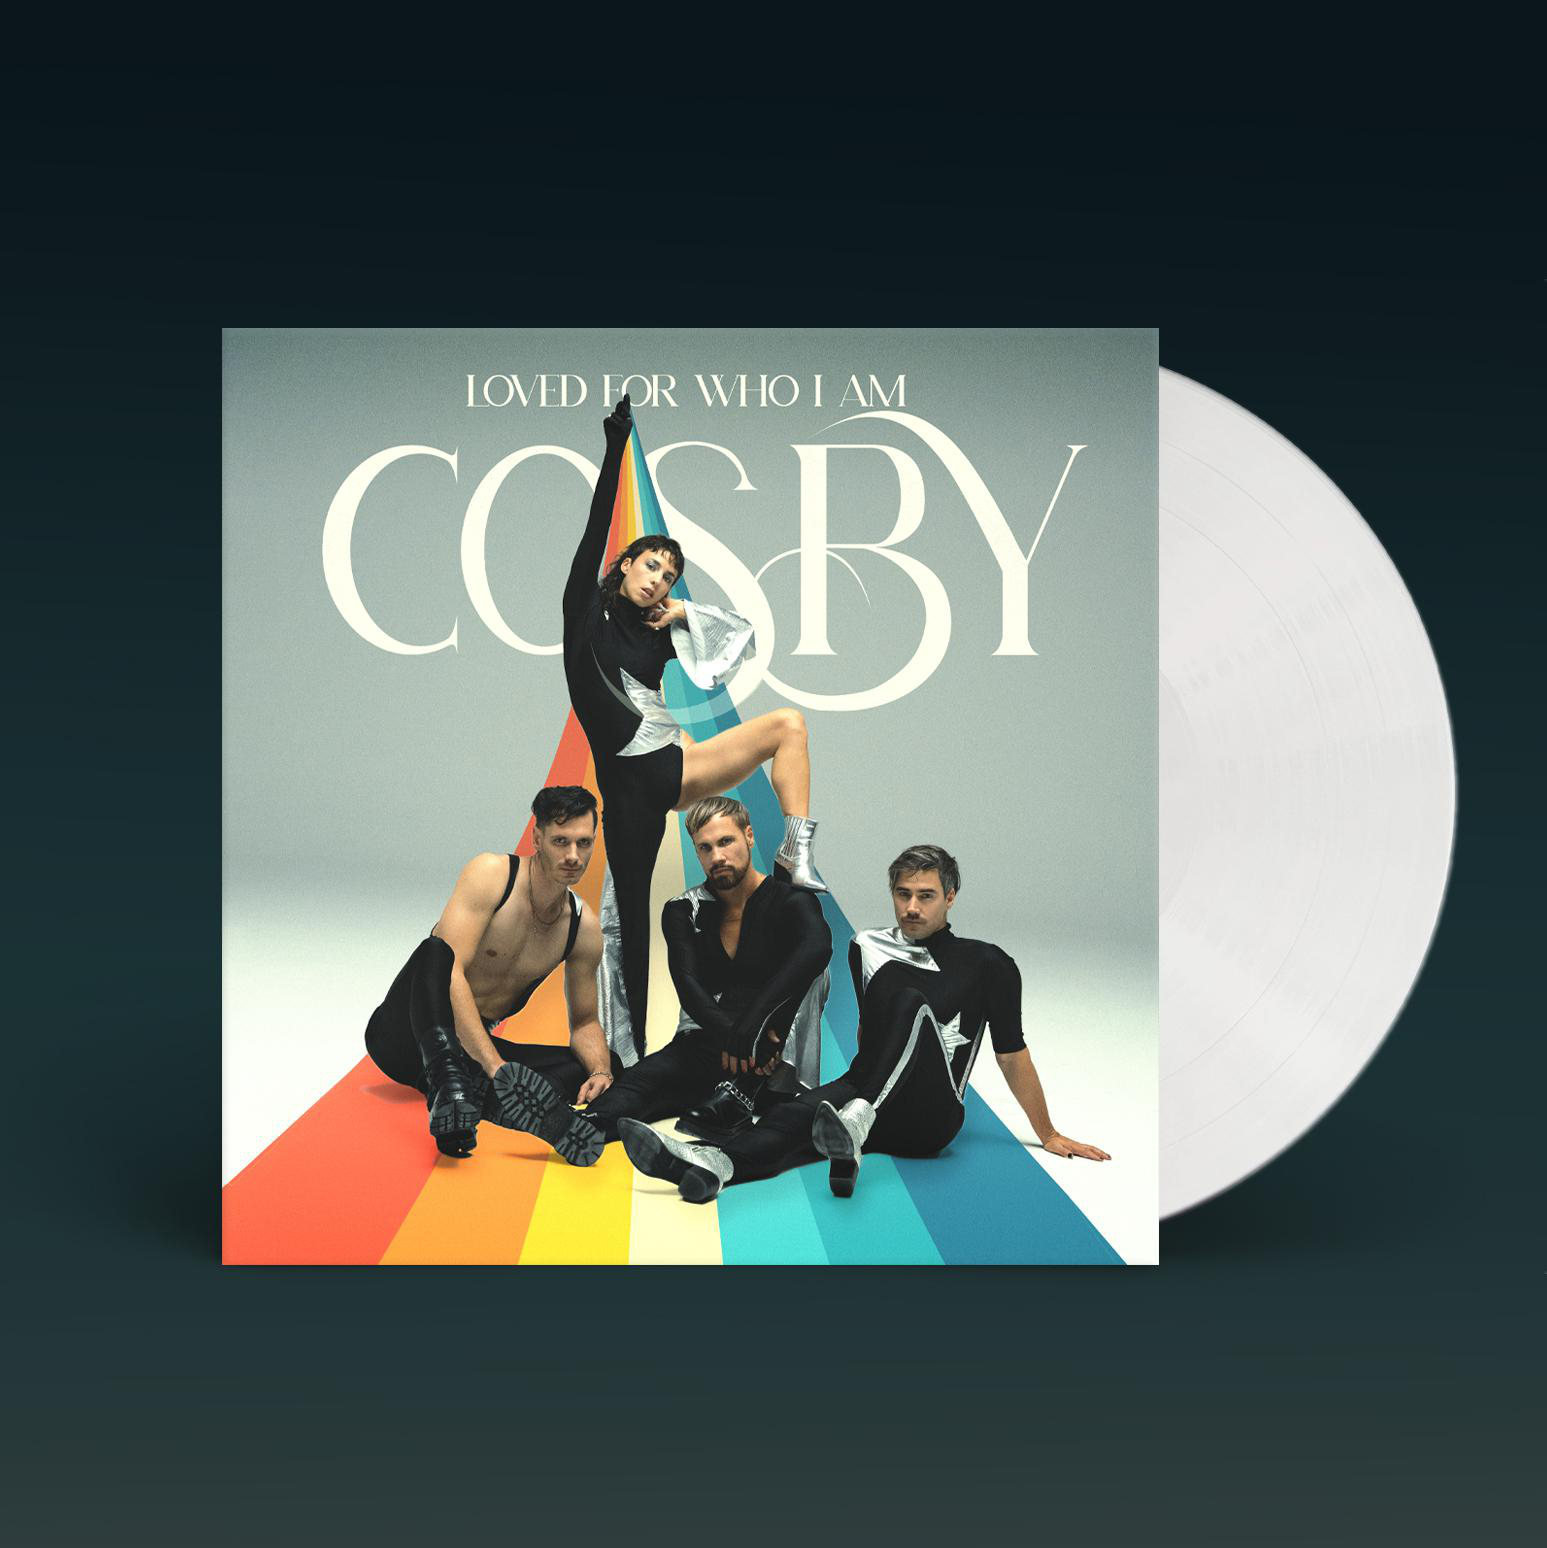 For I (Vinyl) Am - - White (Limitierte Loved Who Cosby Vinyl)